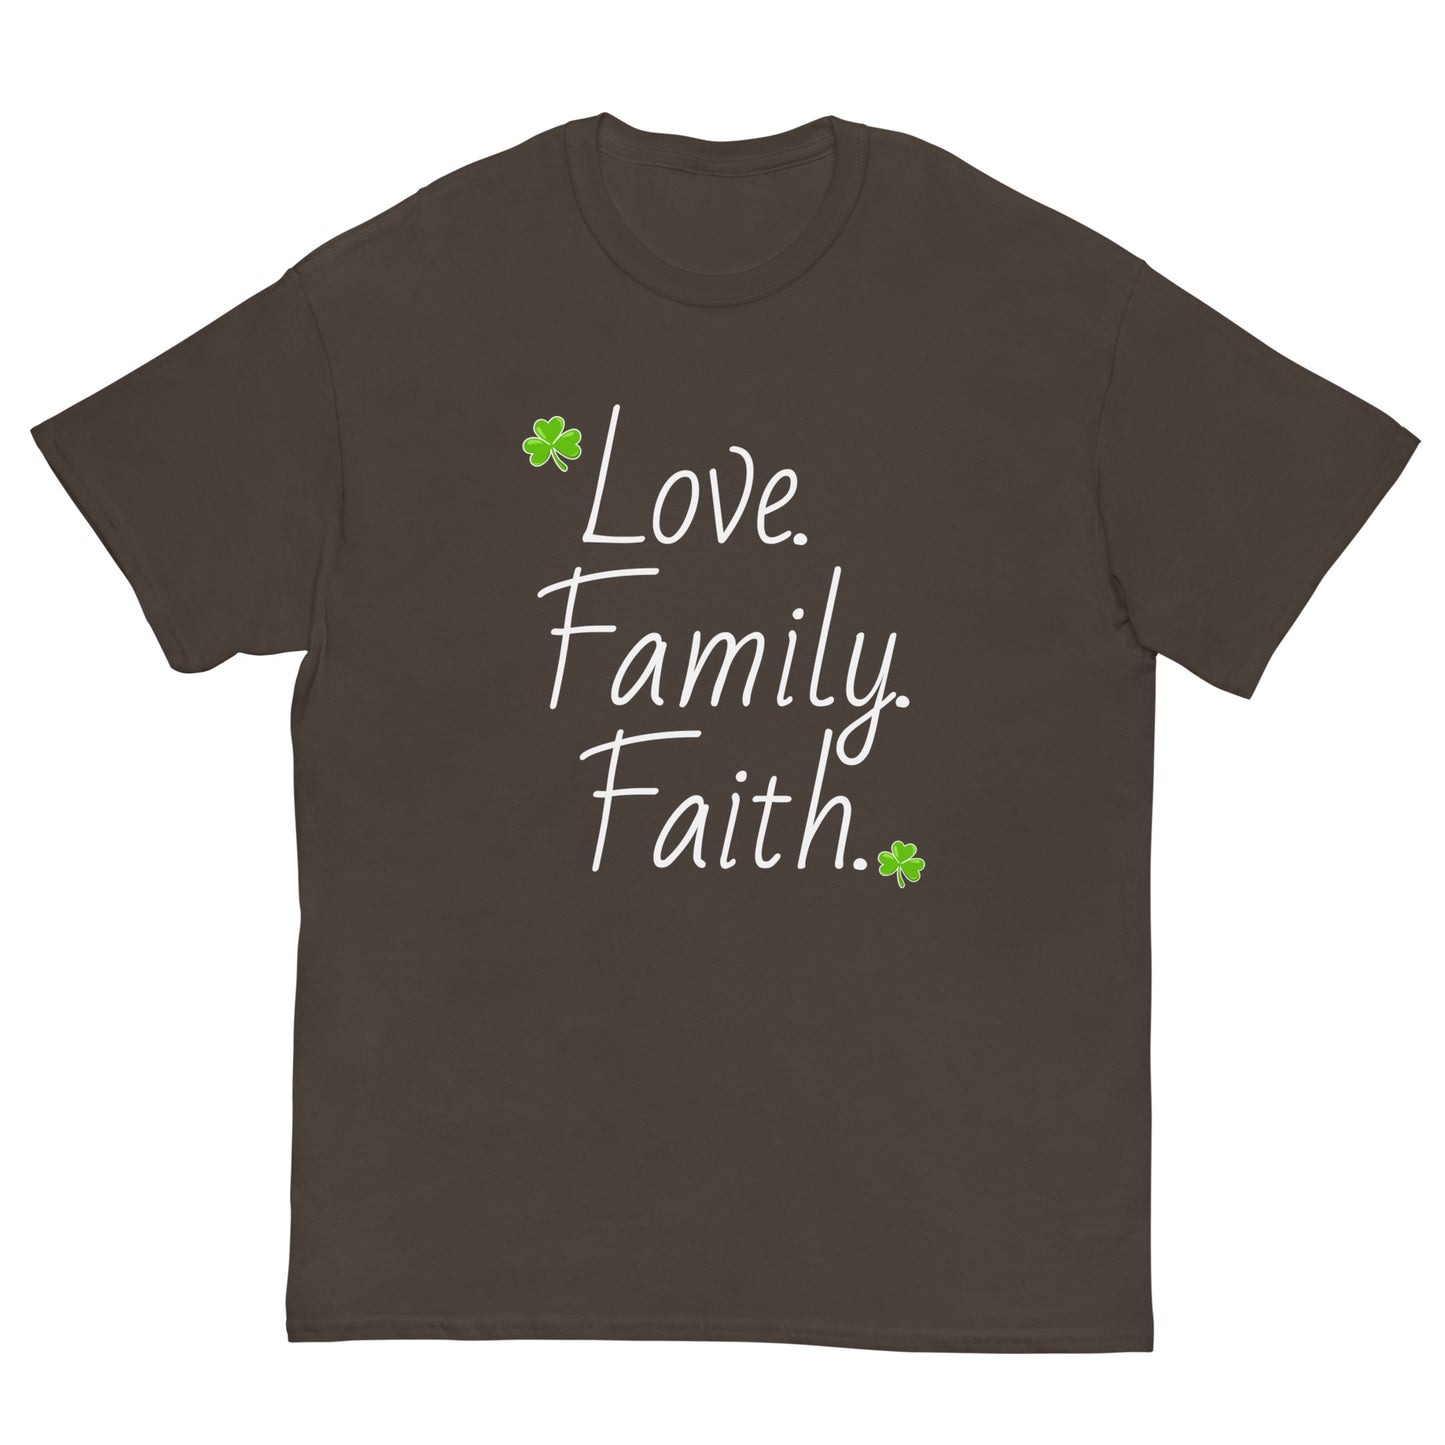 Love, Family, Faith classic tee (white design)